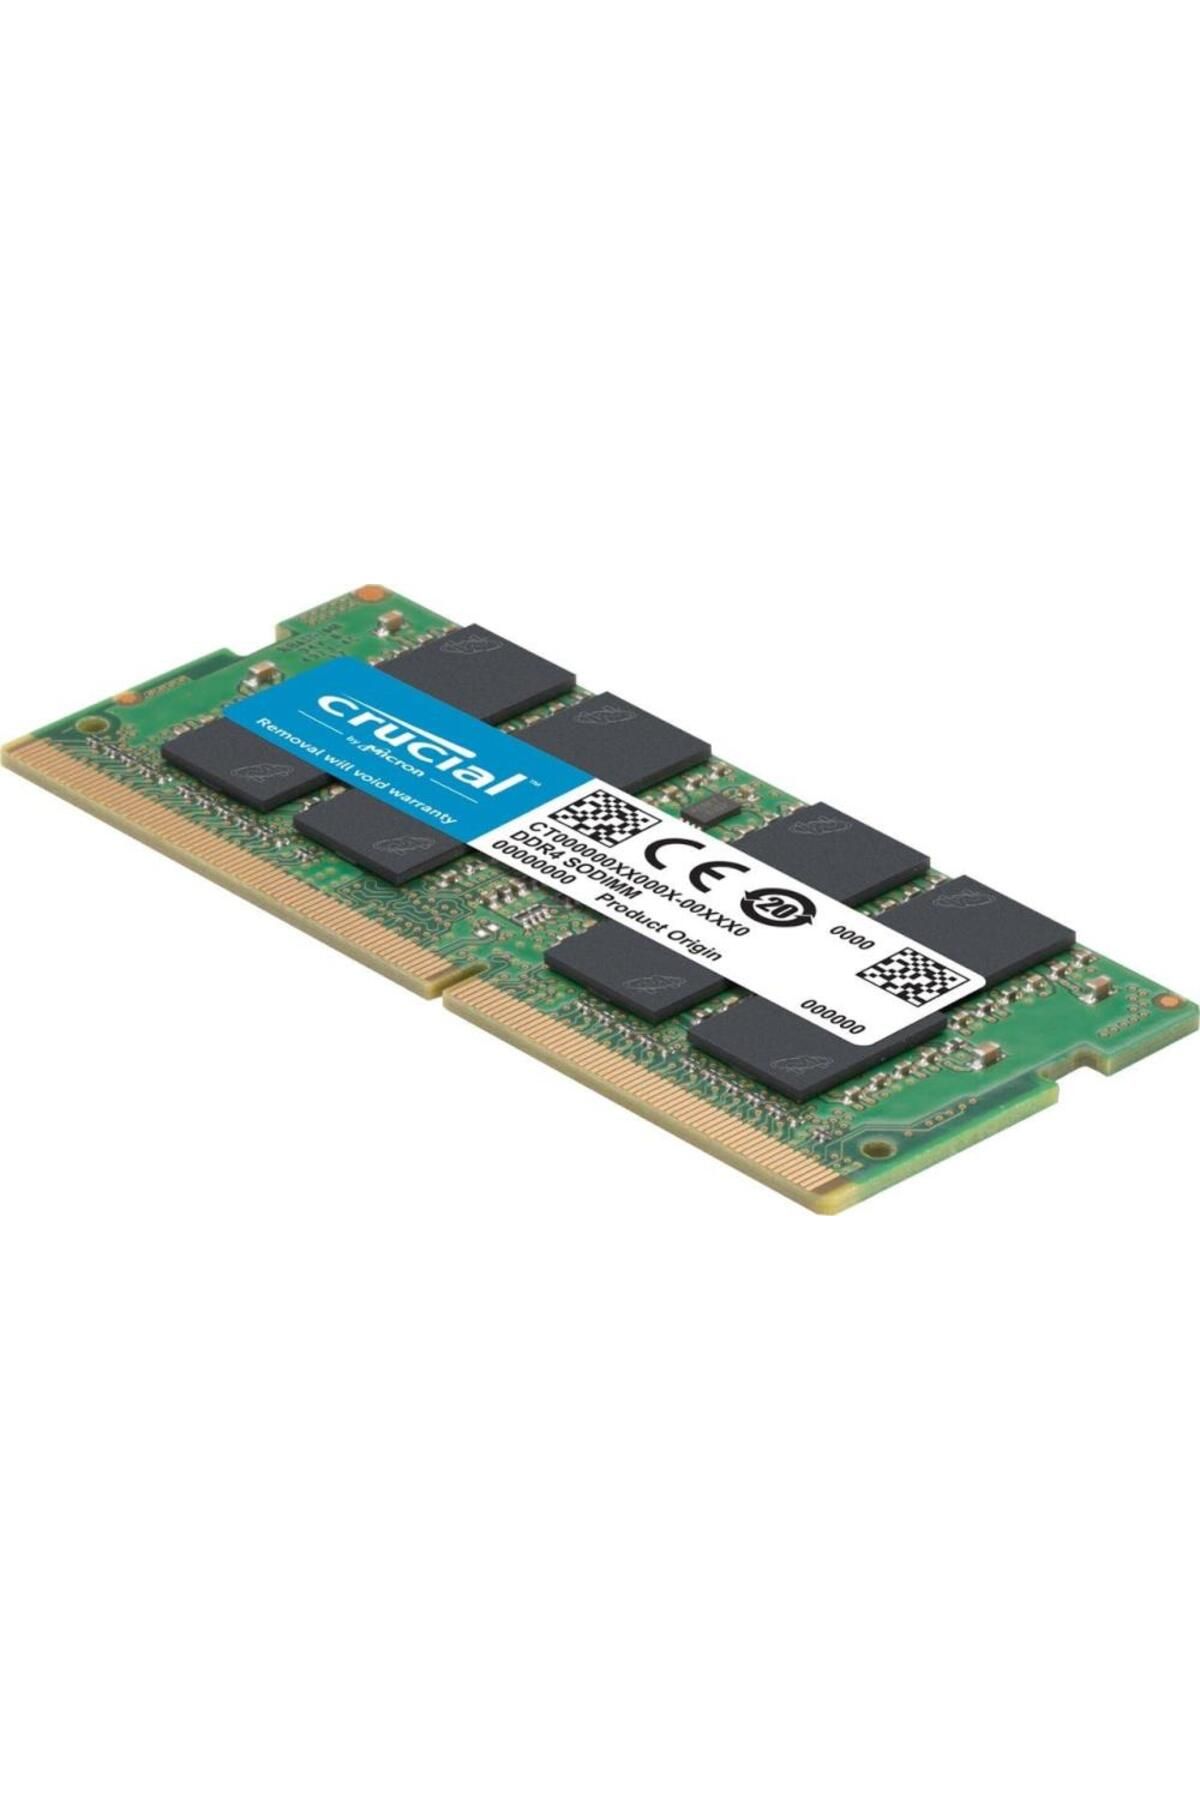 CRUCIALS Crucial 32GB DDR4 3200Mhz CT32G4SFD832A Notebook Ram